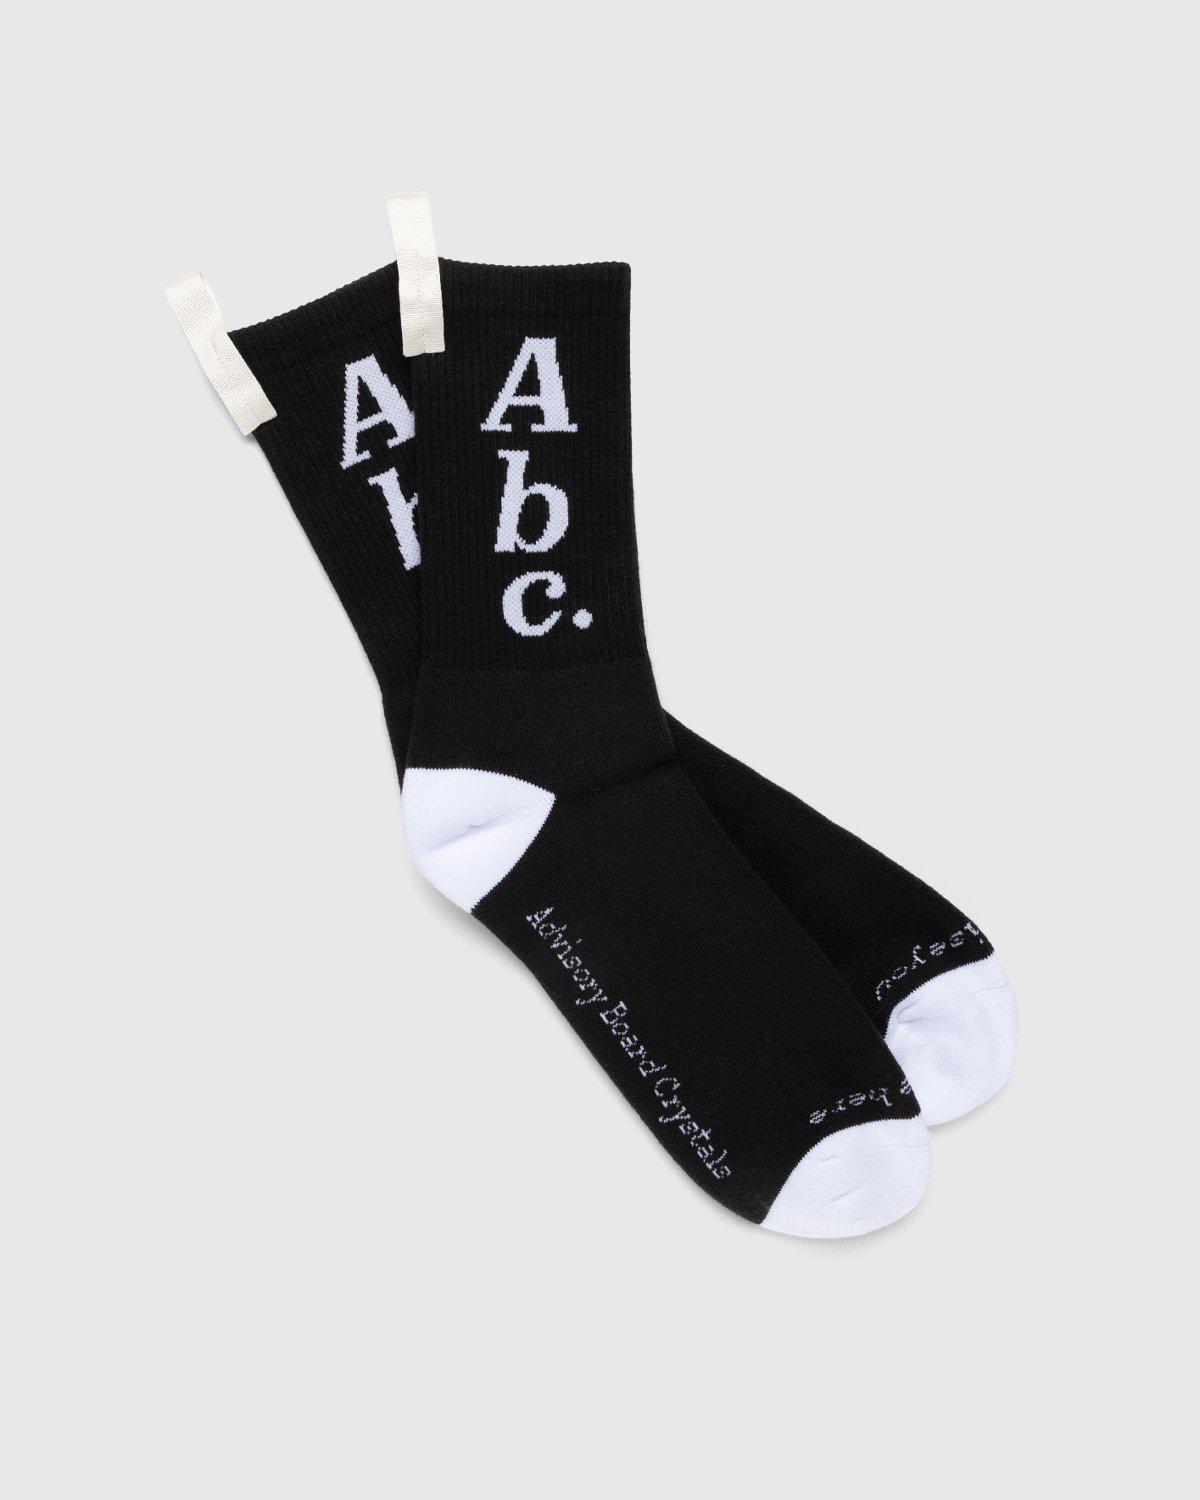 Abc. – Crew Socks Anthracite by ABC.